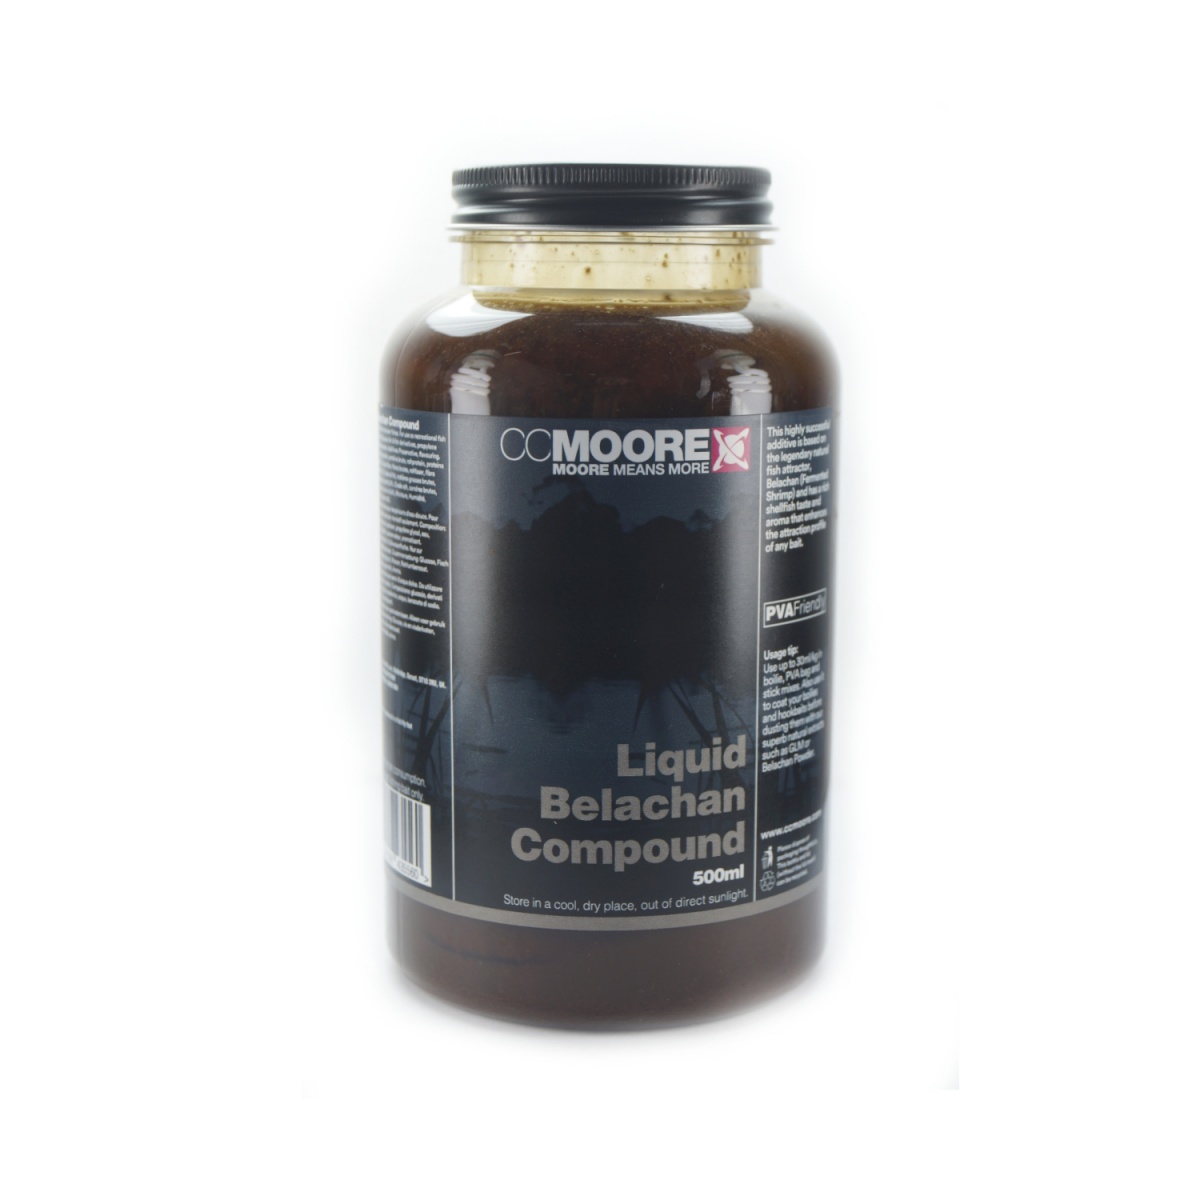 NEW CcMoore Liquid Belachan Extract 500 ml  opakowanie